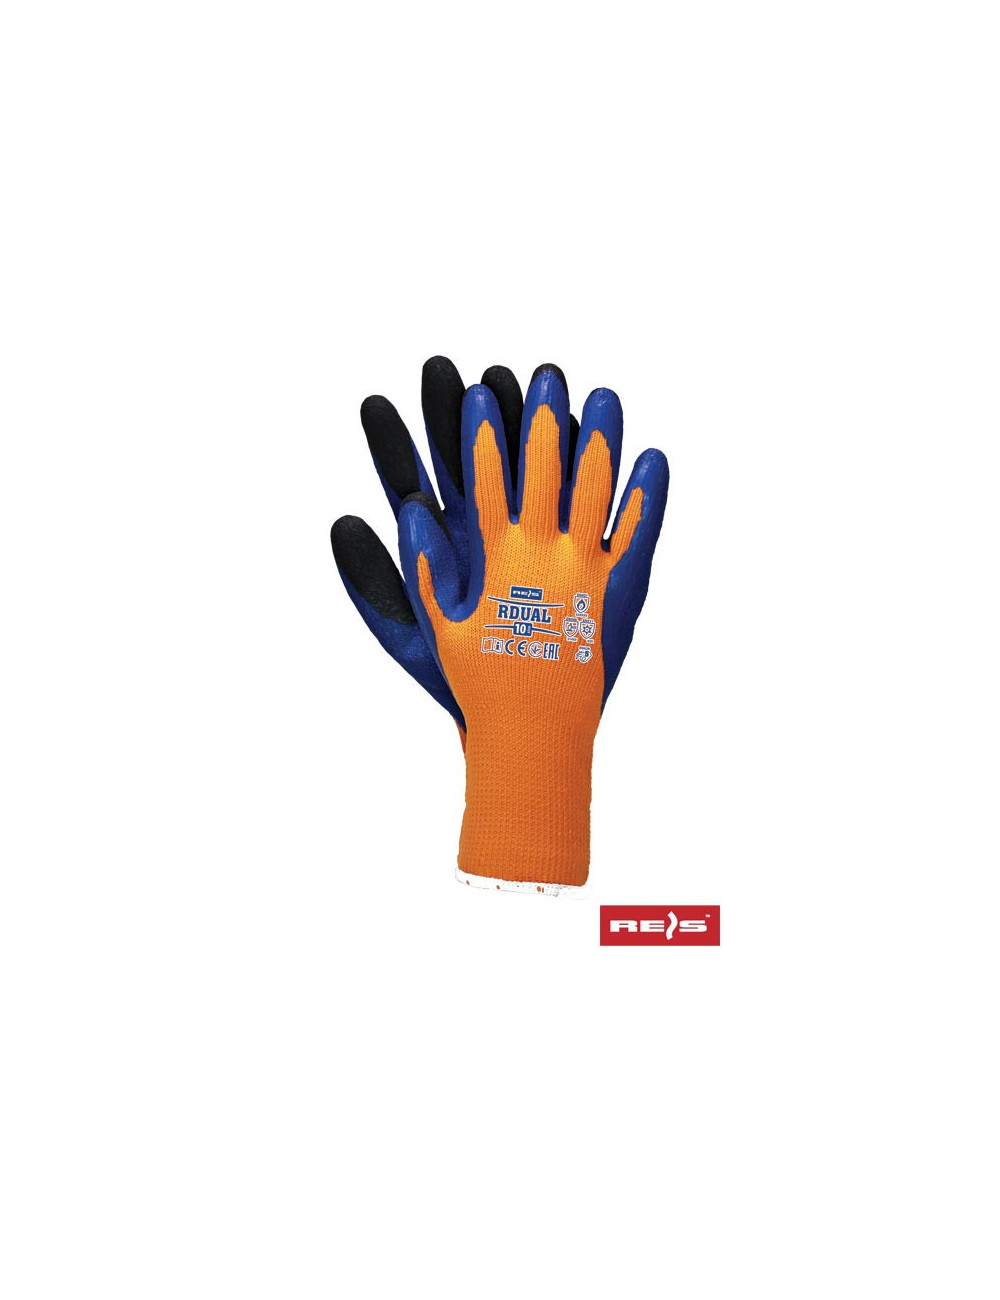 Protective gloves rdual pnb orange-blue-black Reis